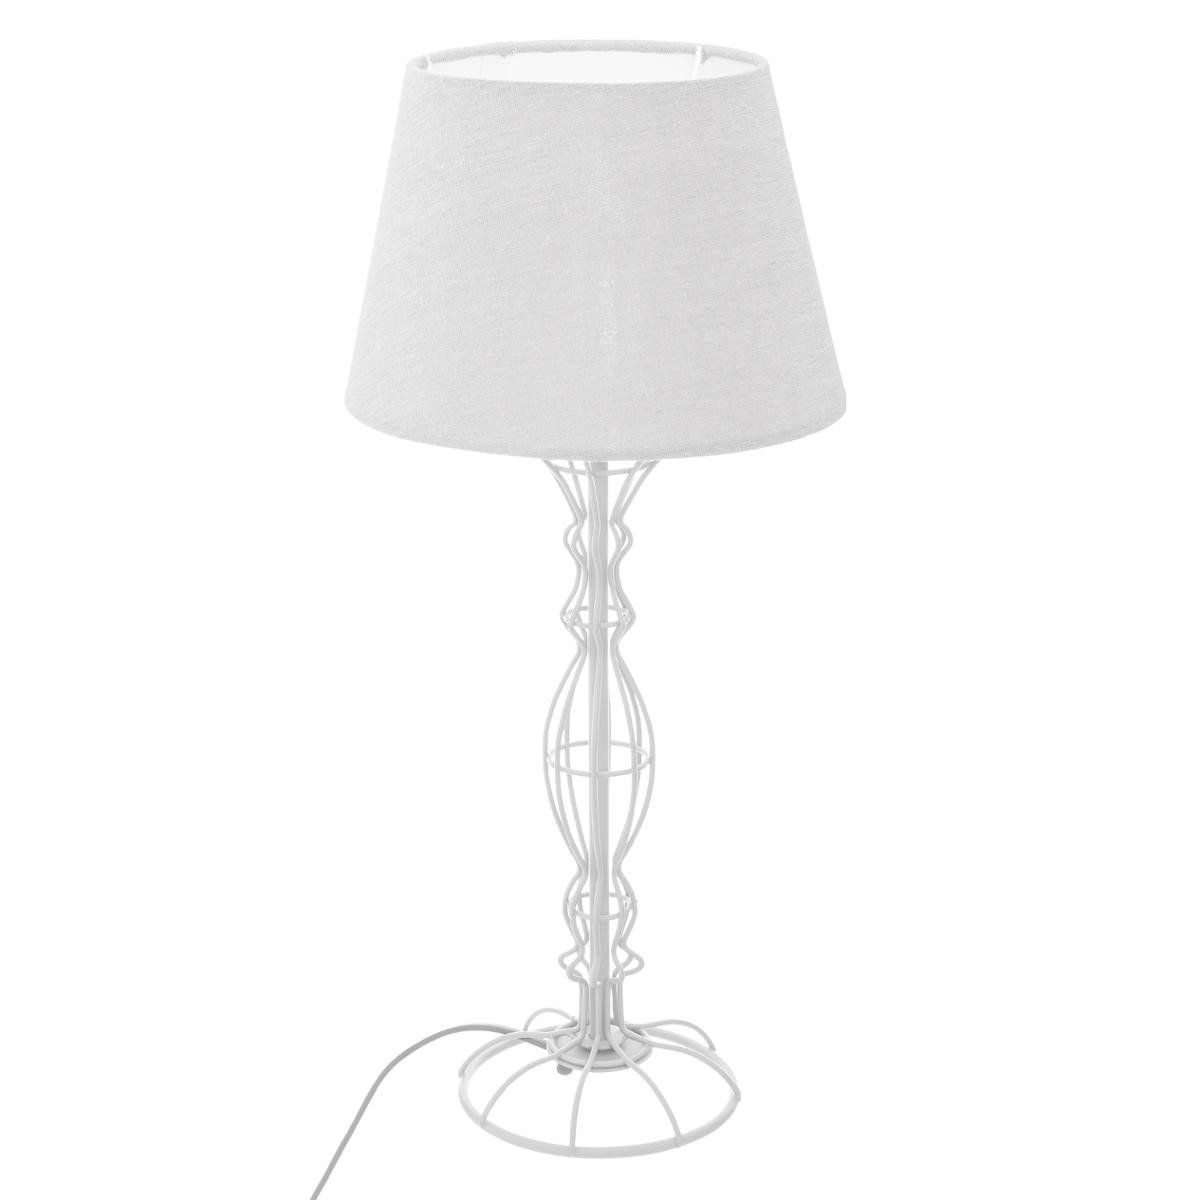 Atmosphera ROSE kovová stolní lampa, 48 cm, barva bílá - EMAKO.CZ s.r.o.